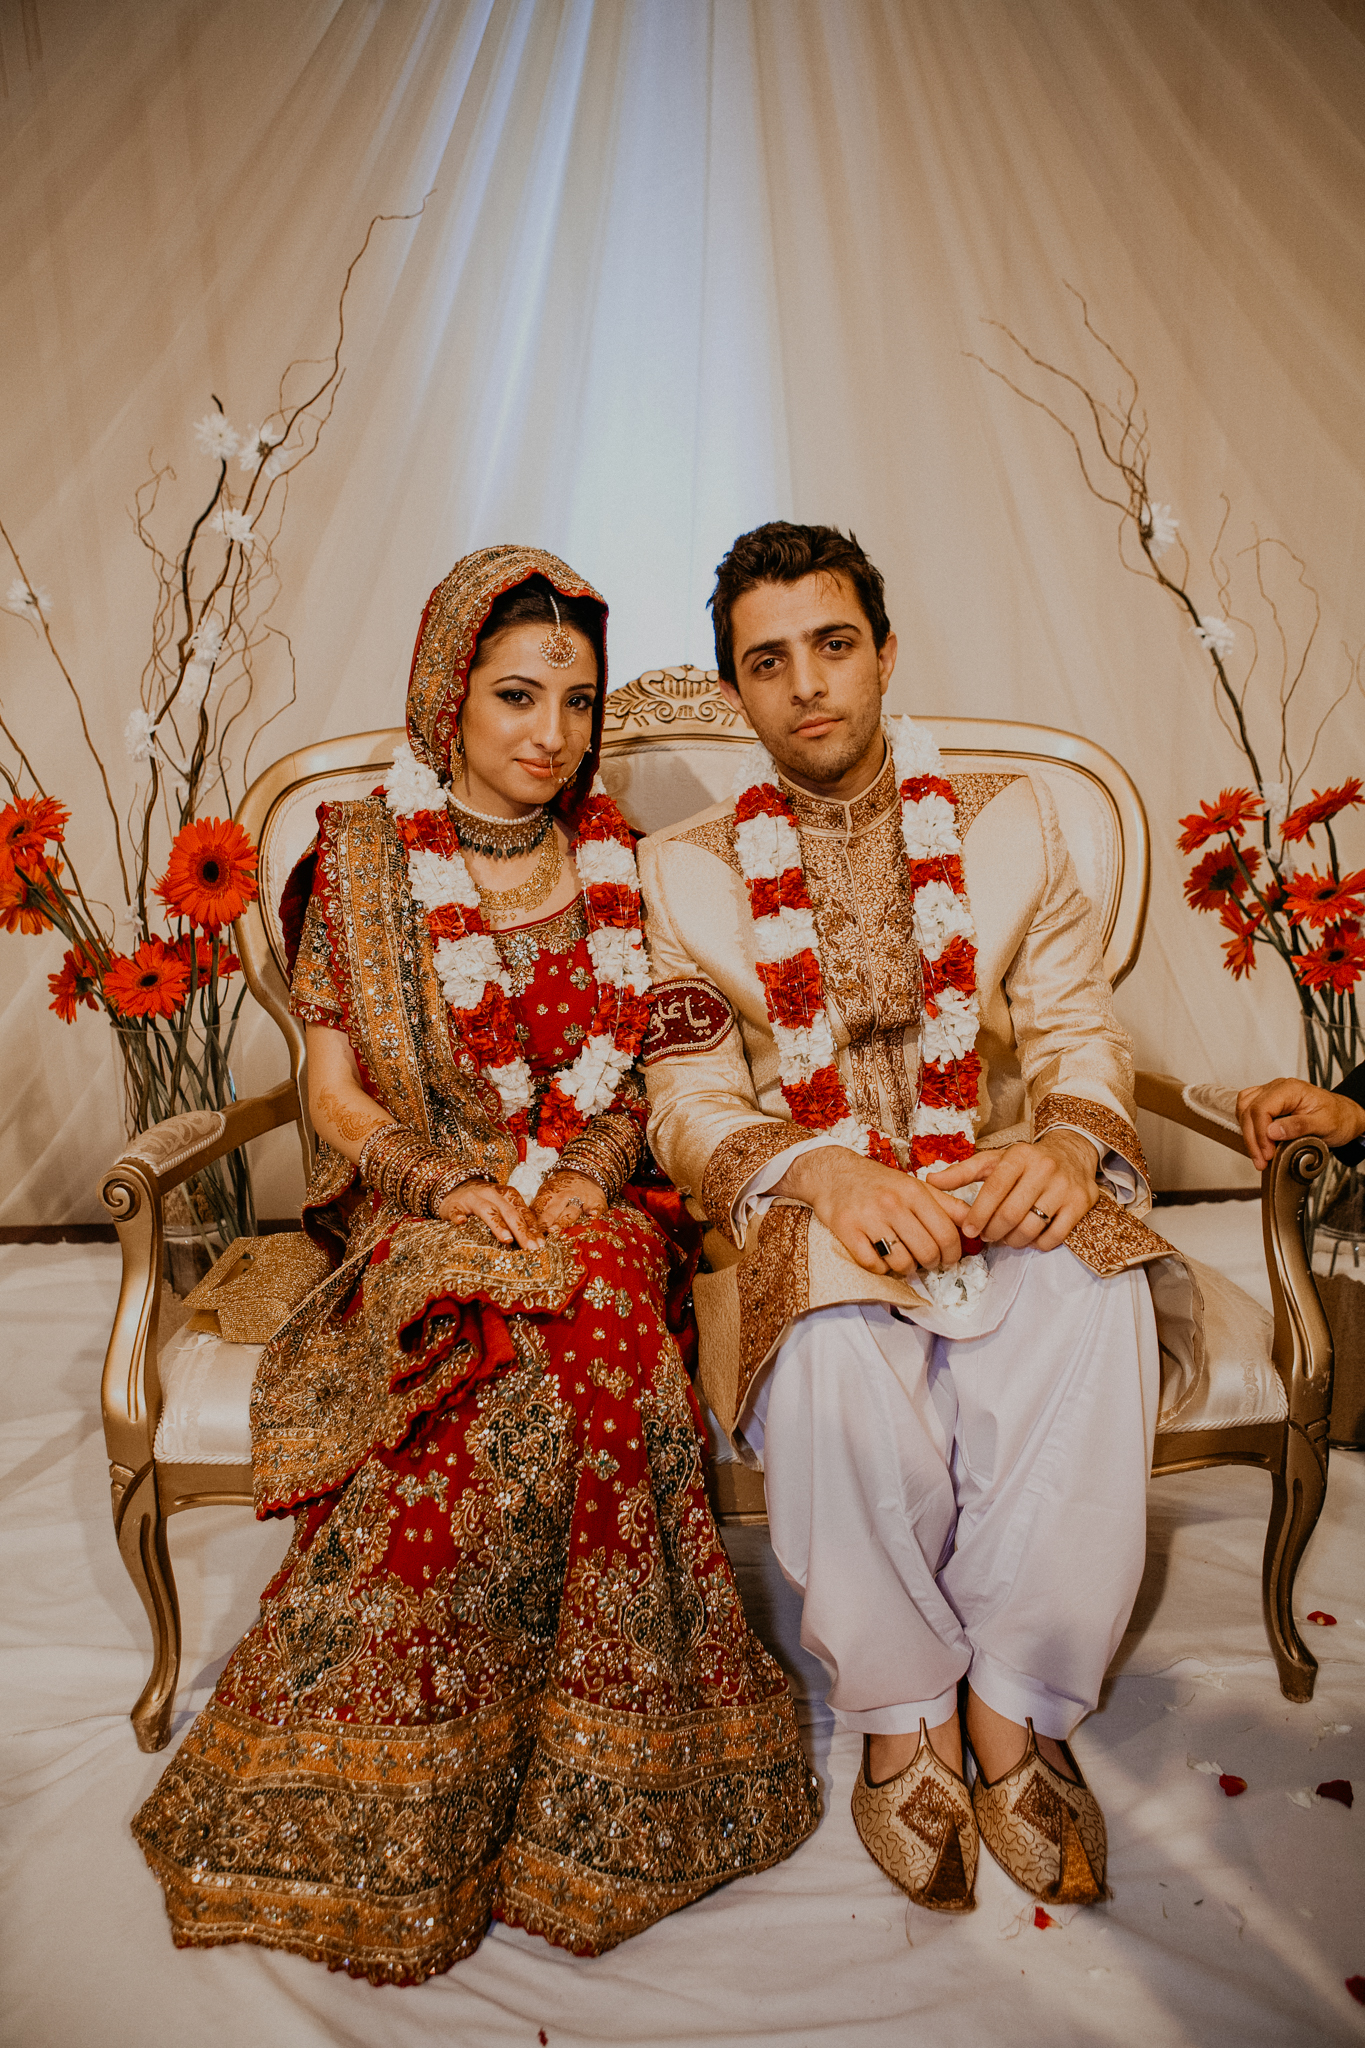 Bride and groom smile at Mehndi wedding celebration